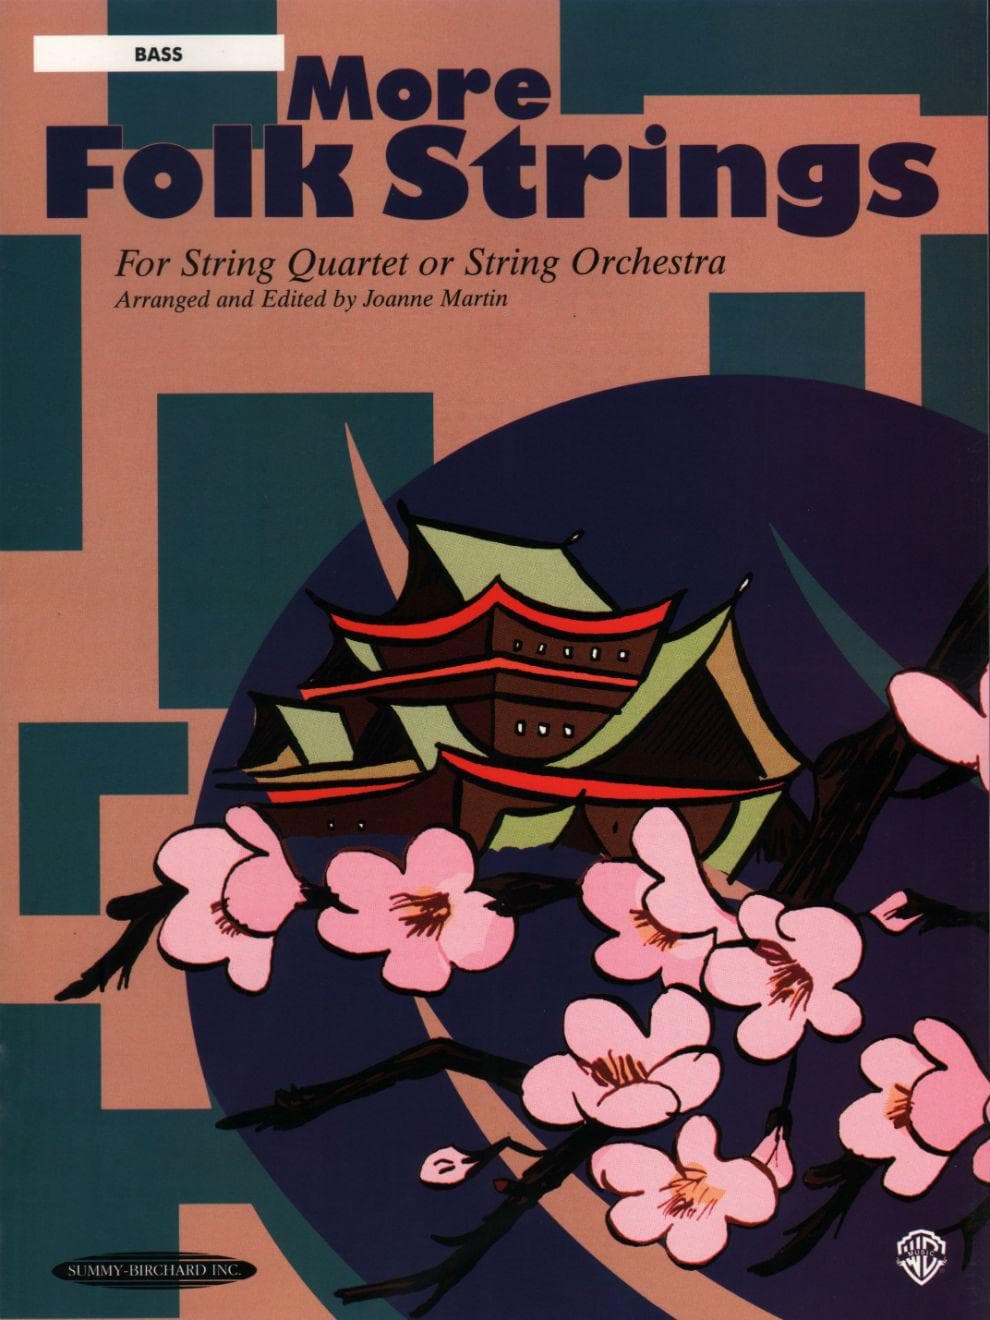 Martin, Joanne - More Folk Strings for String Quartet or String Orchestra - Bass part - Alfred Music Publishing